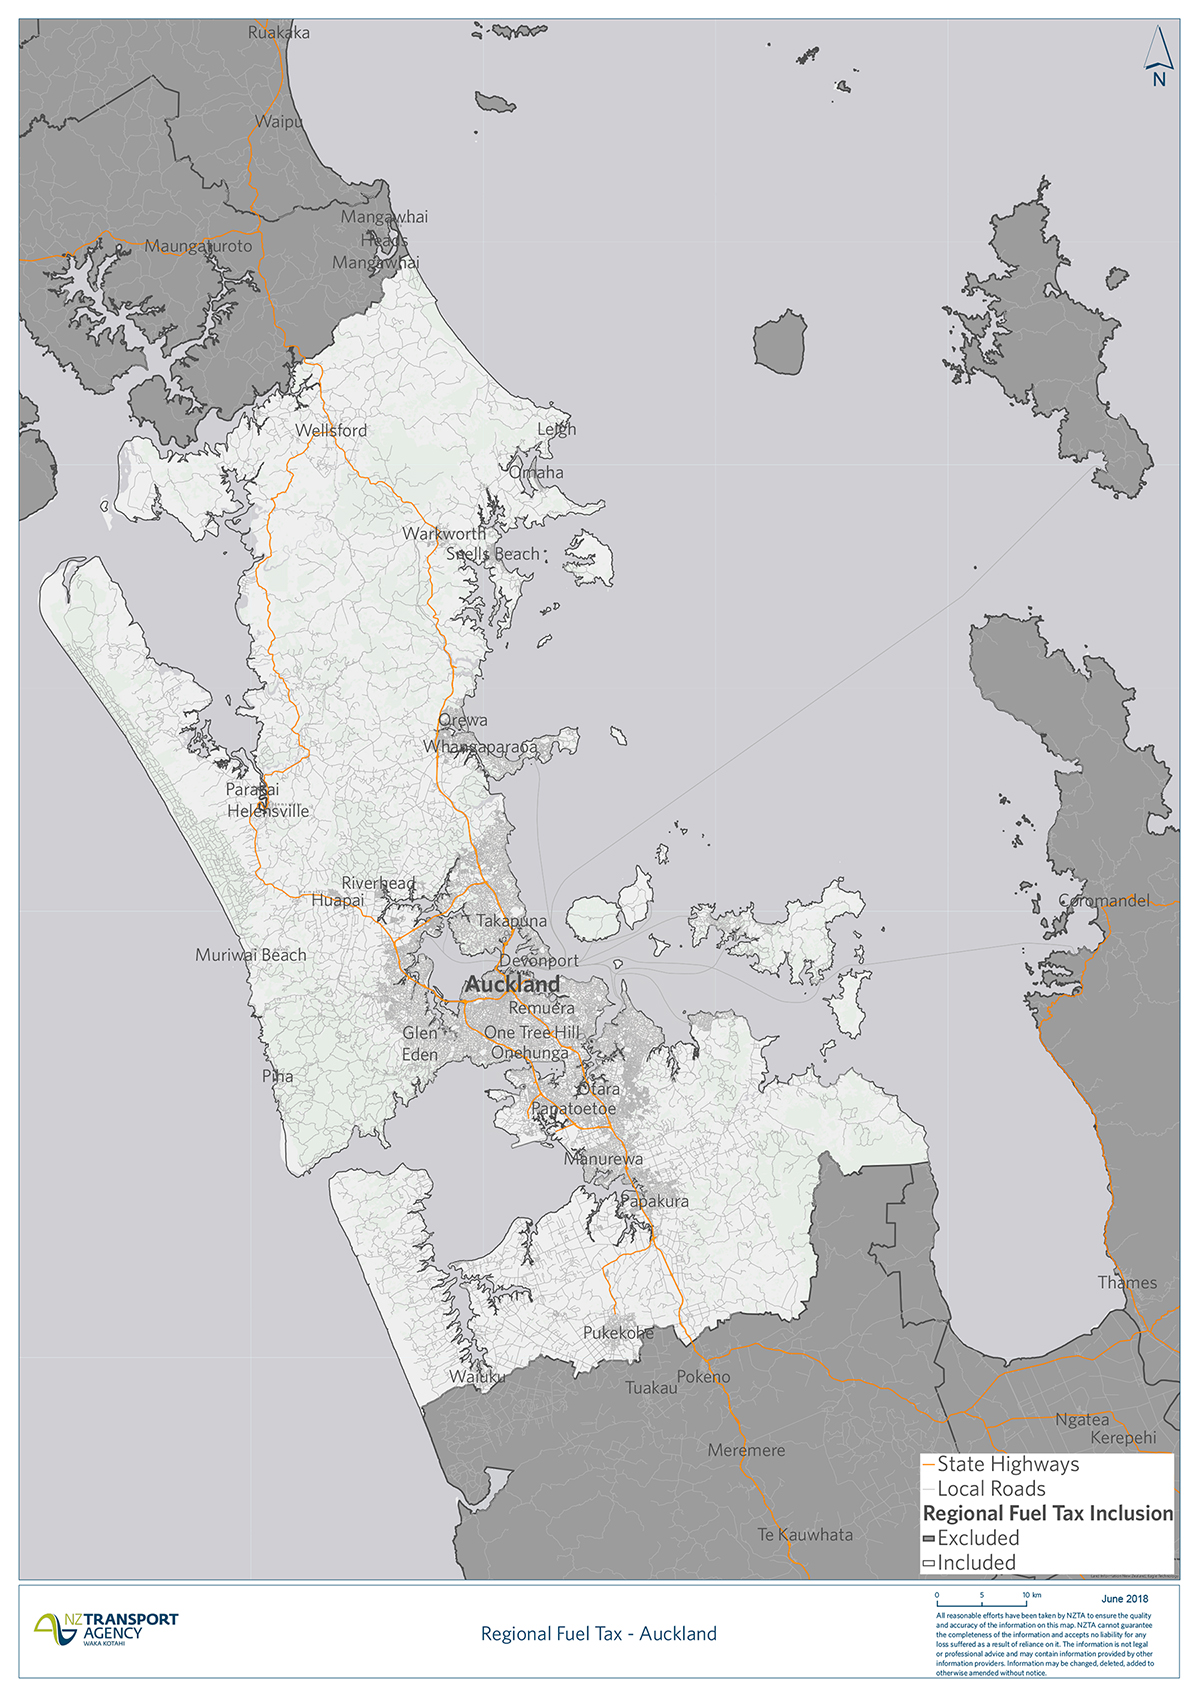 Full Auckland region